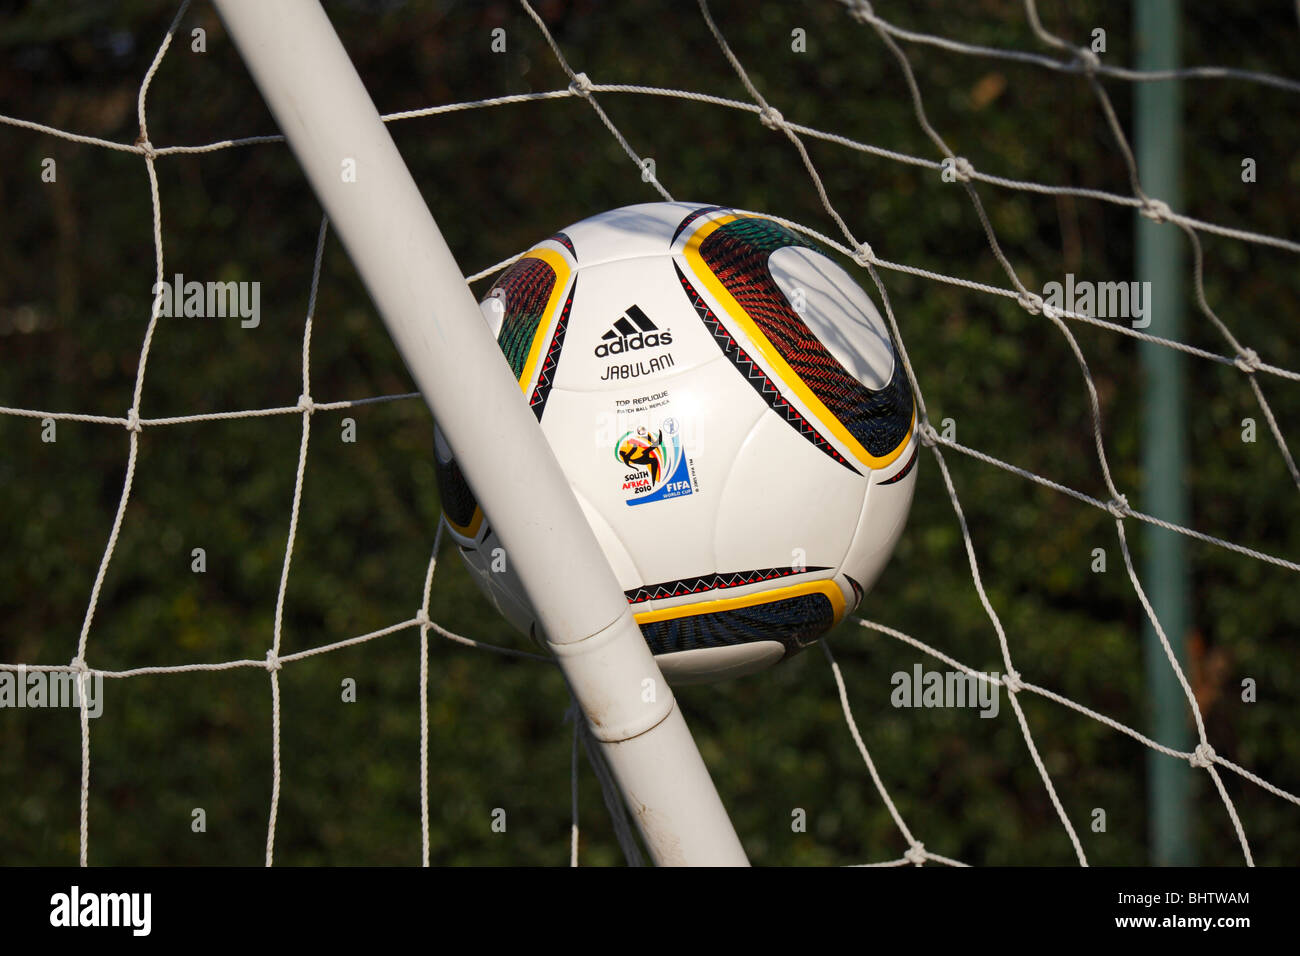 The adidas jabulani football hi-res stock photography and images - Alamy